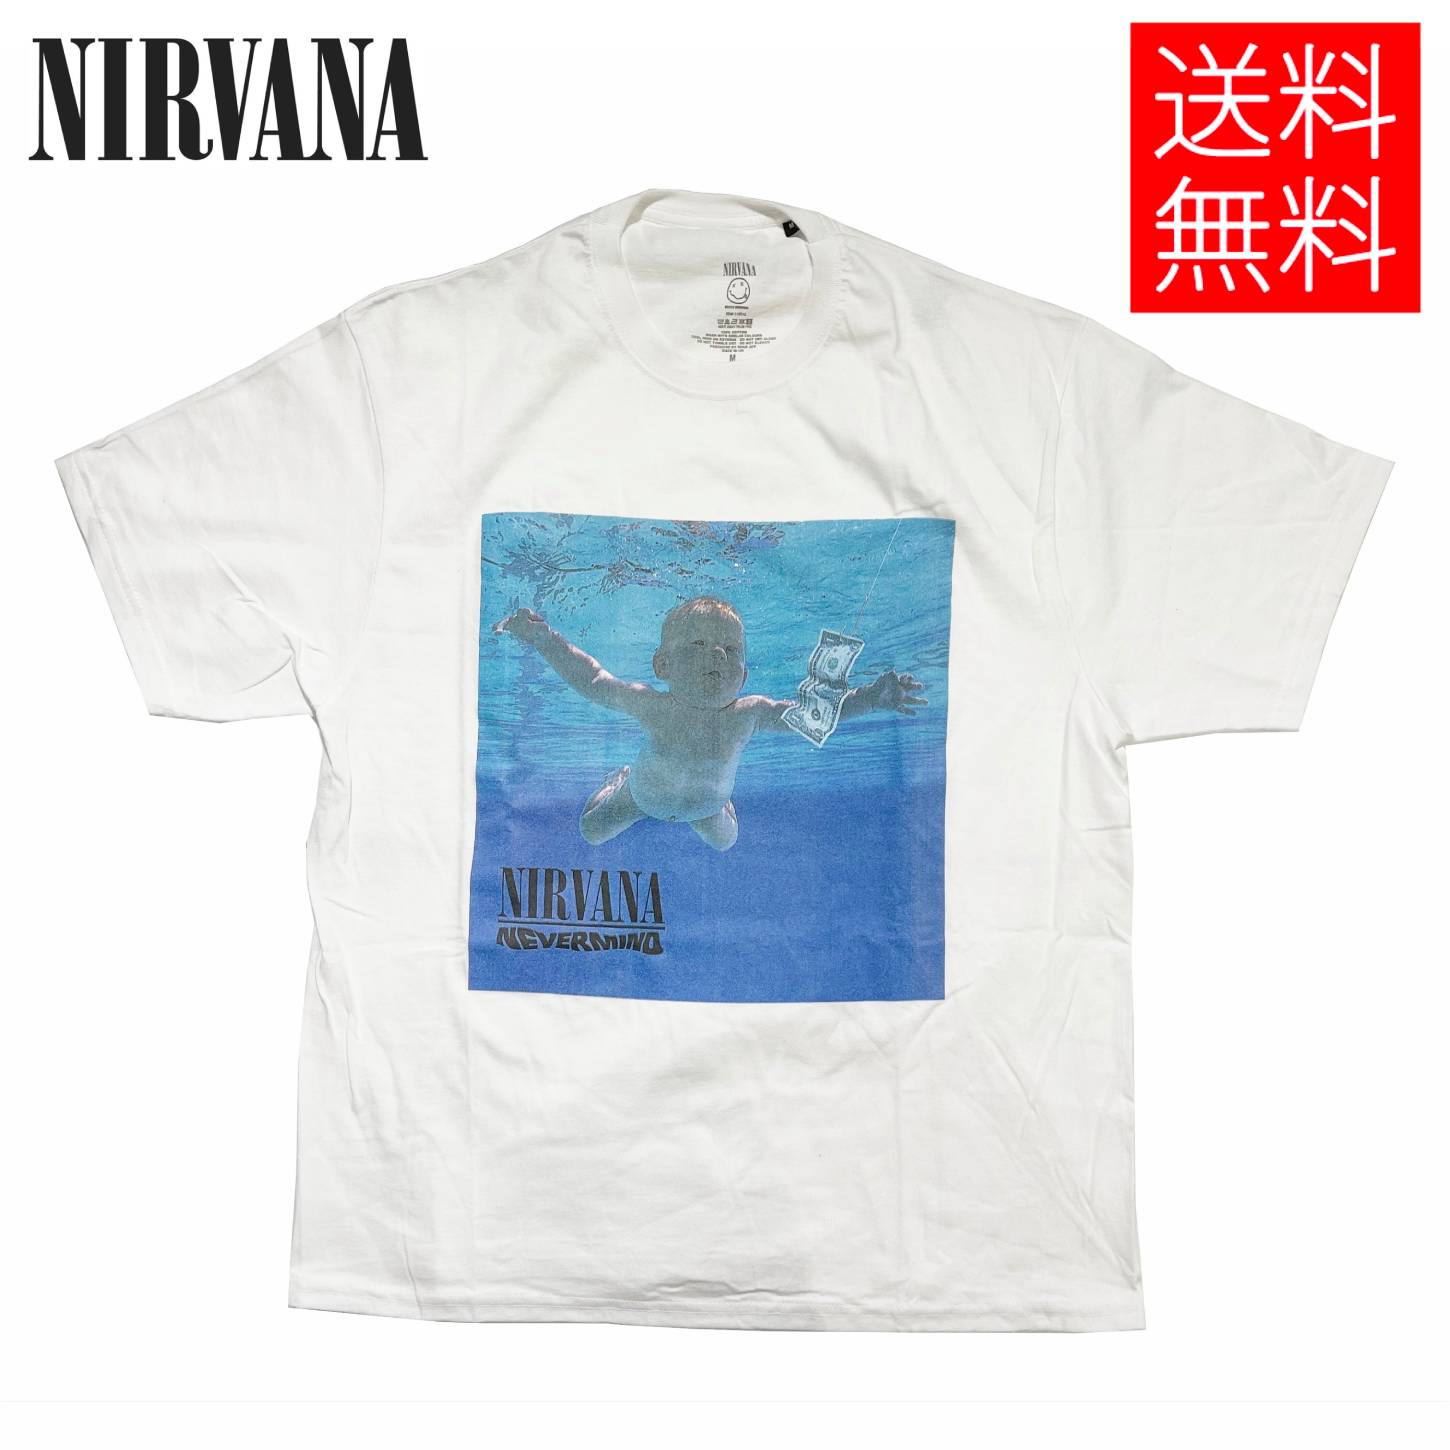 NIRVANA NEVERMIND ALBUM ライセンス オフィシャル Tシャツ
